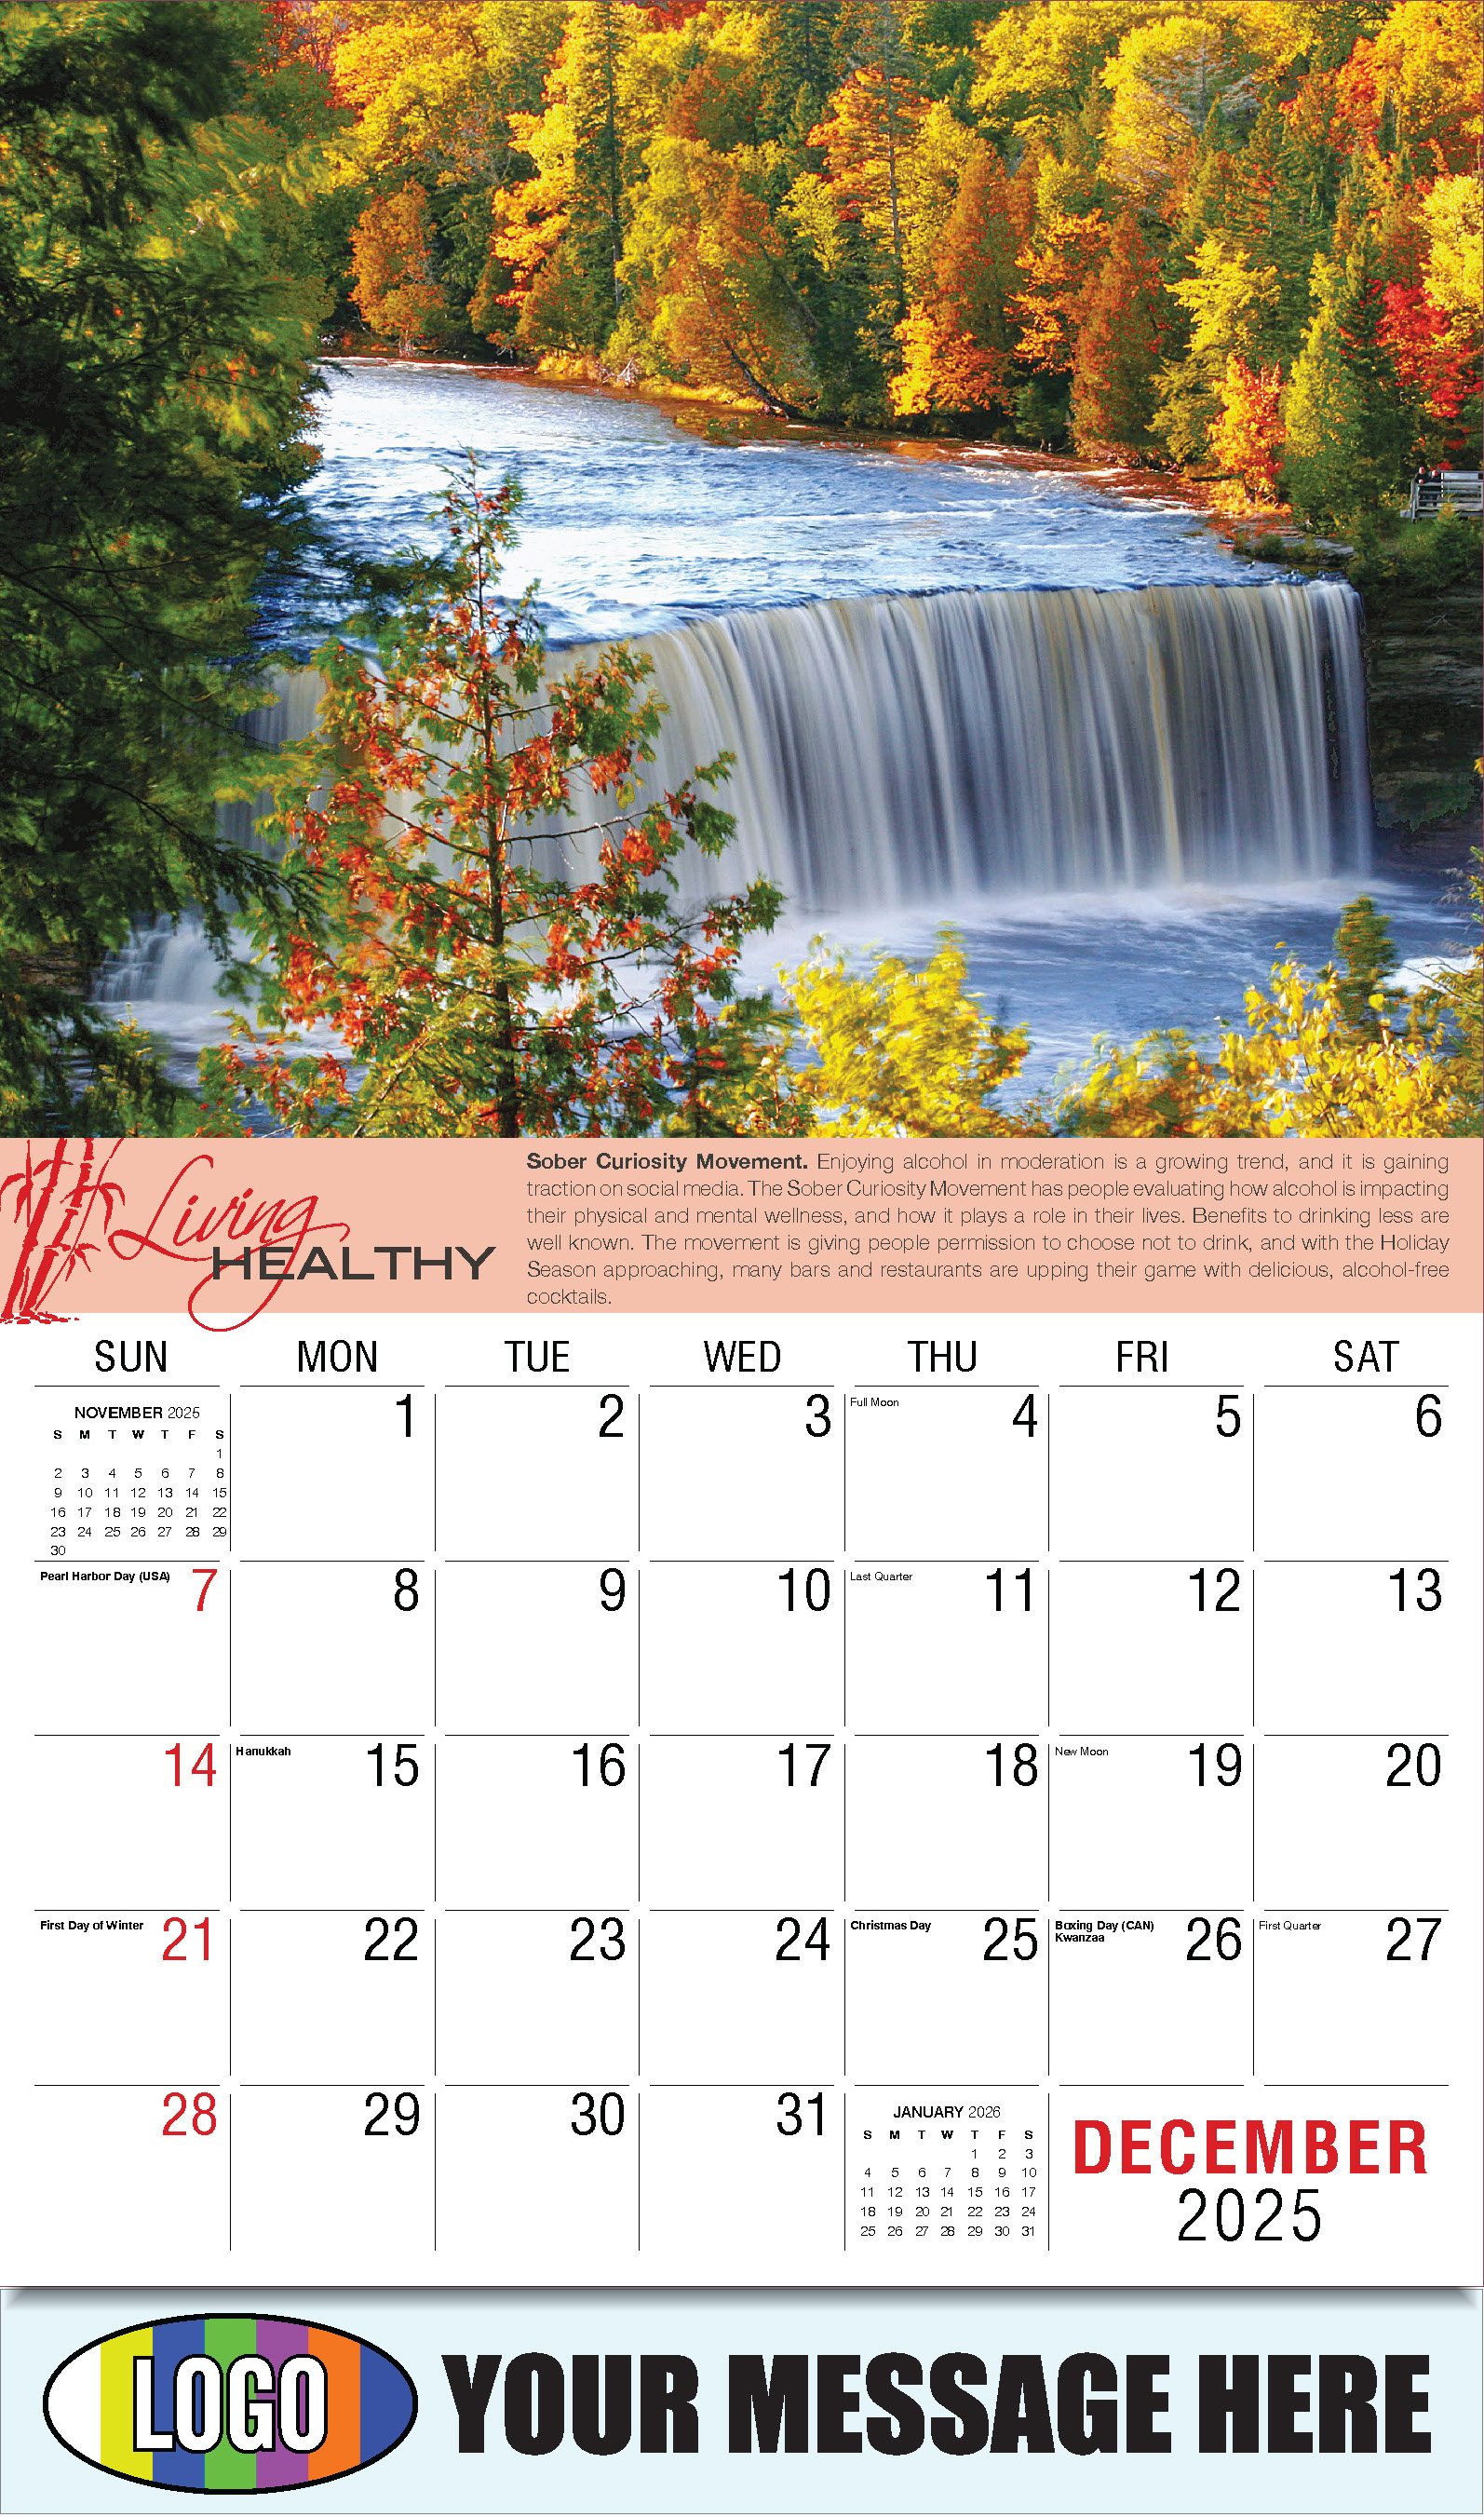 Living Healthy 2025 Business Promotional Calendar - December